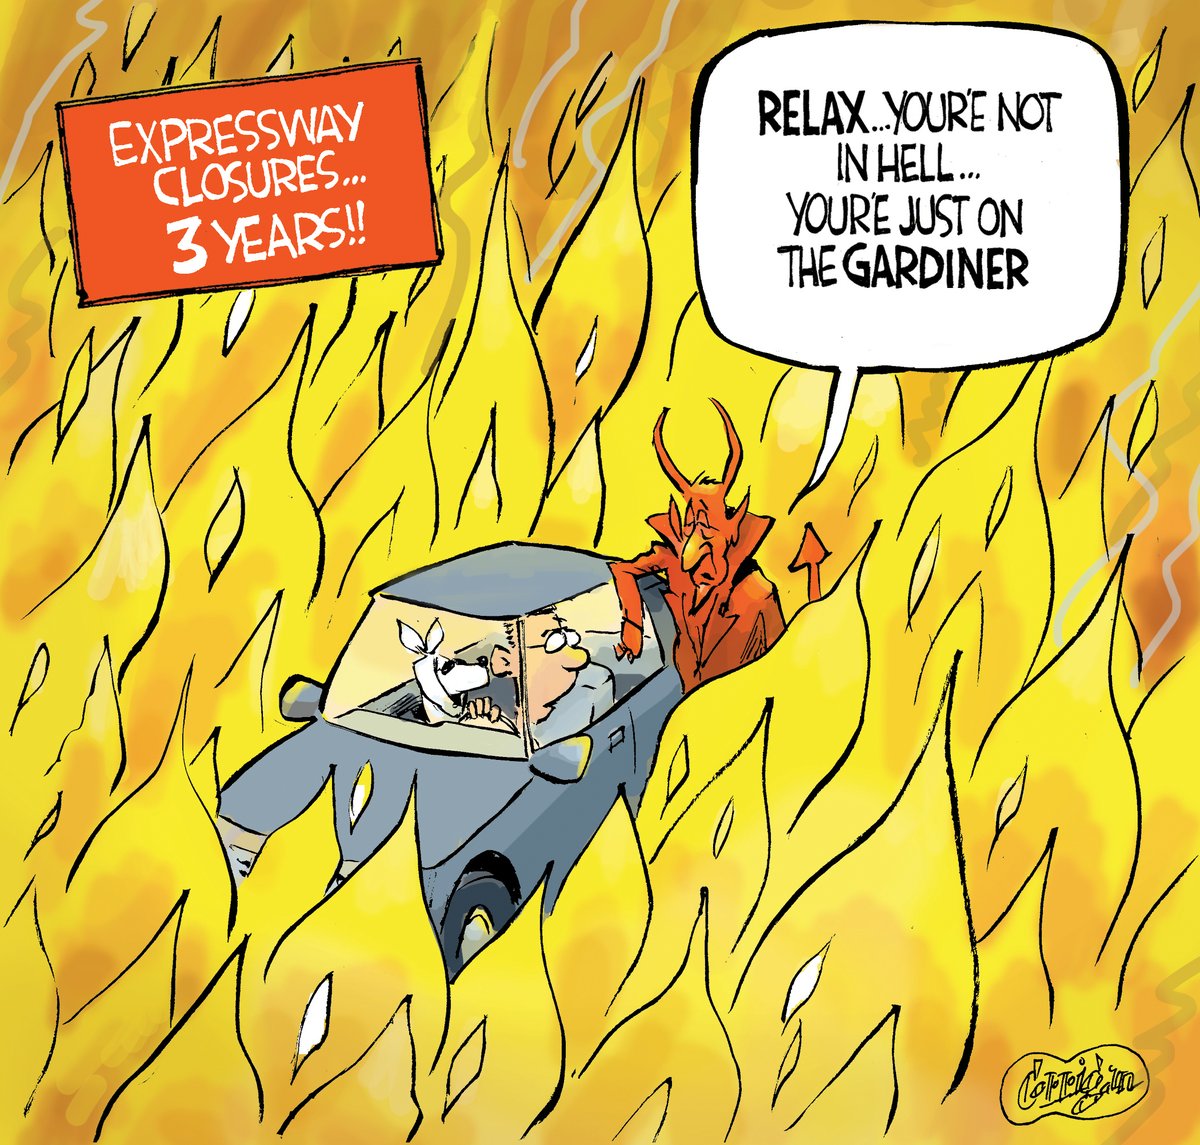 Gardiner Hell!!...enjoy this weekend's cartoon
#onpoli #toronto #TrafficAlert